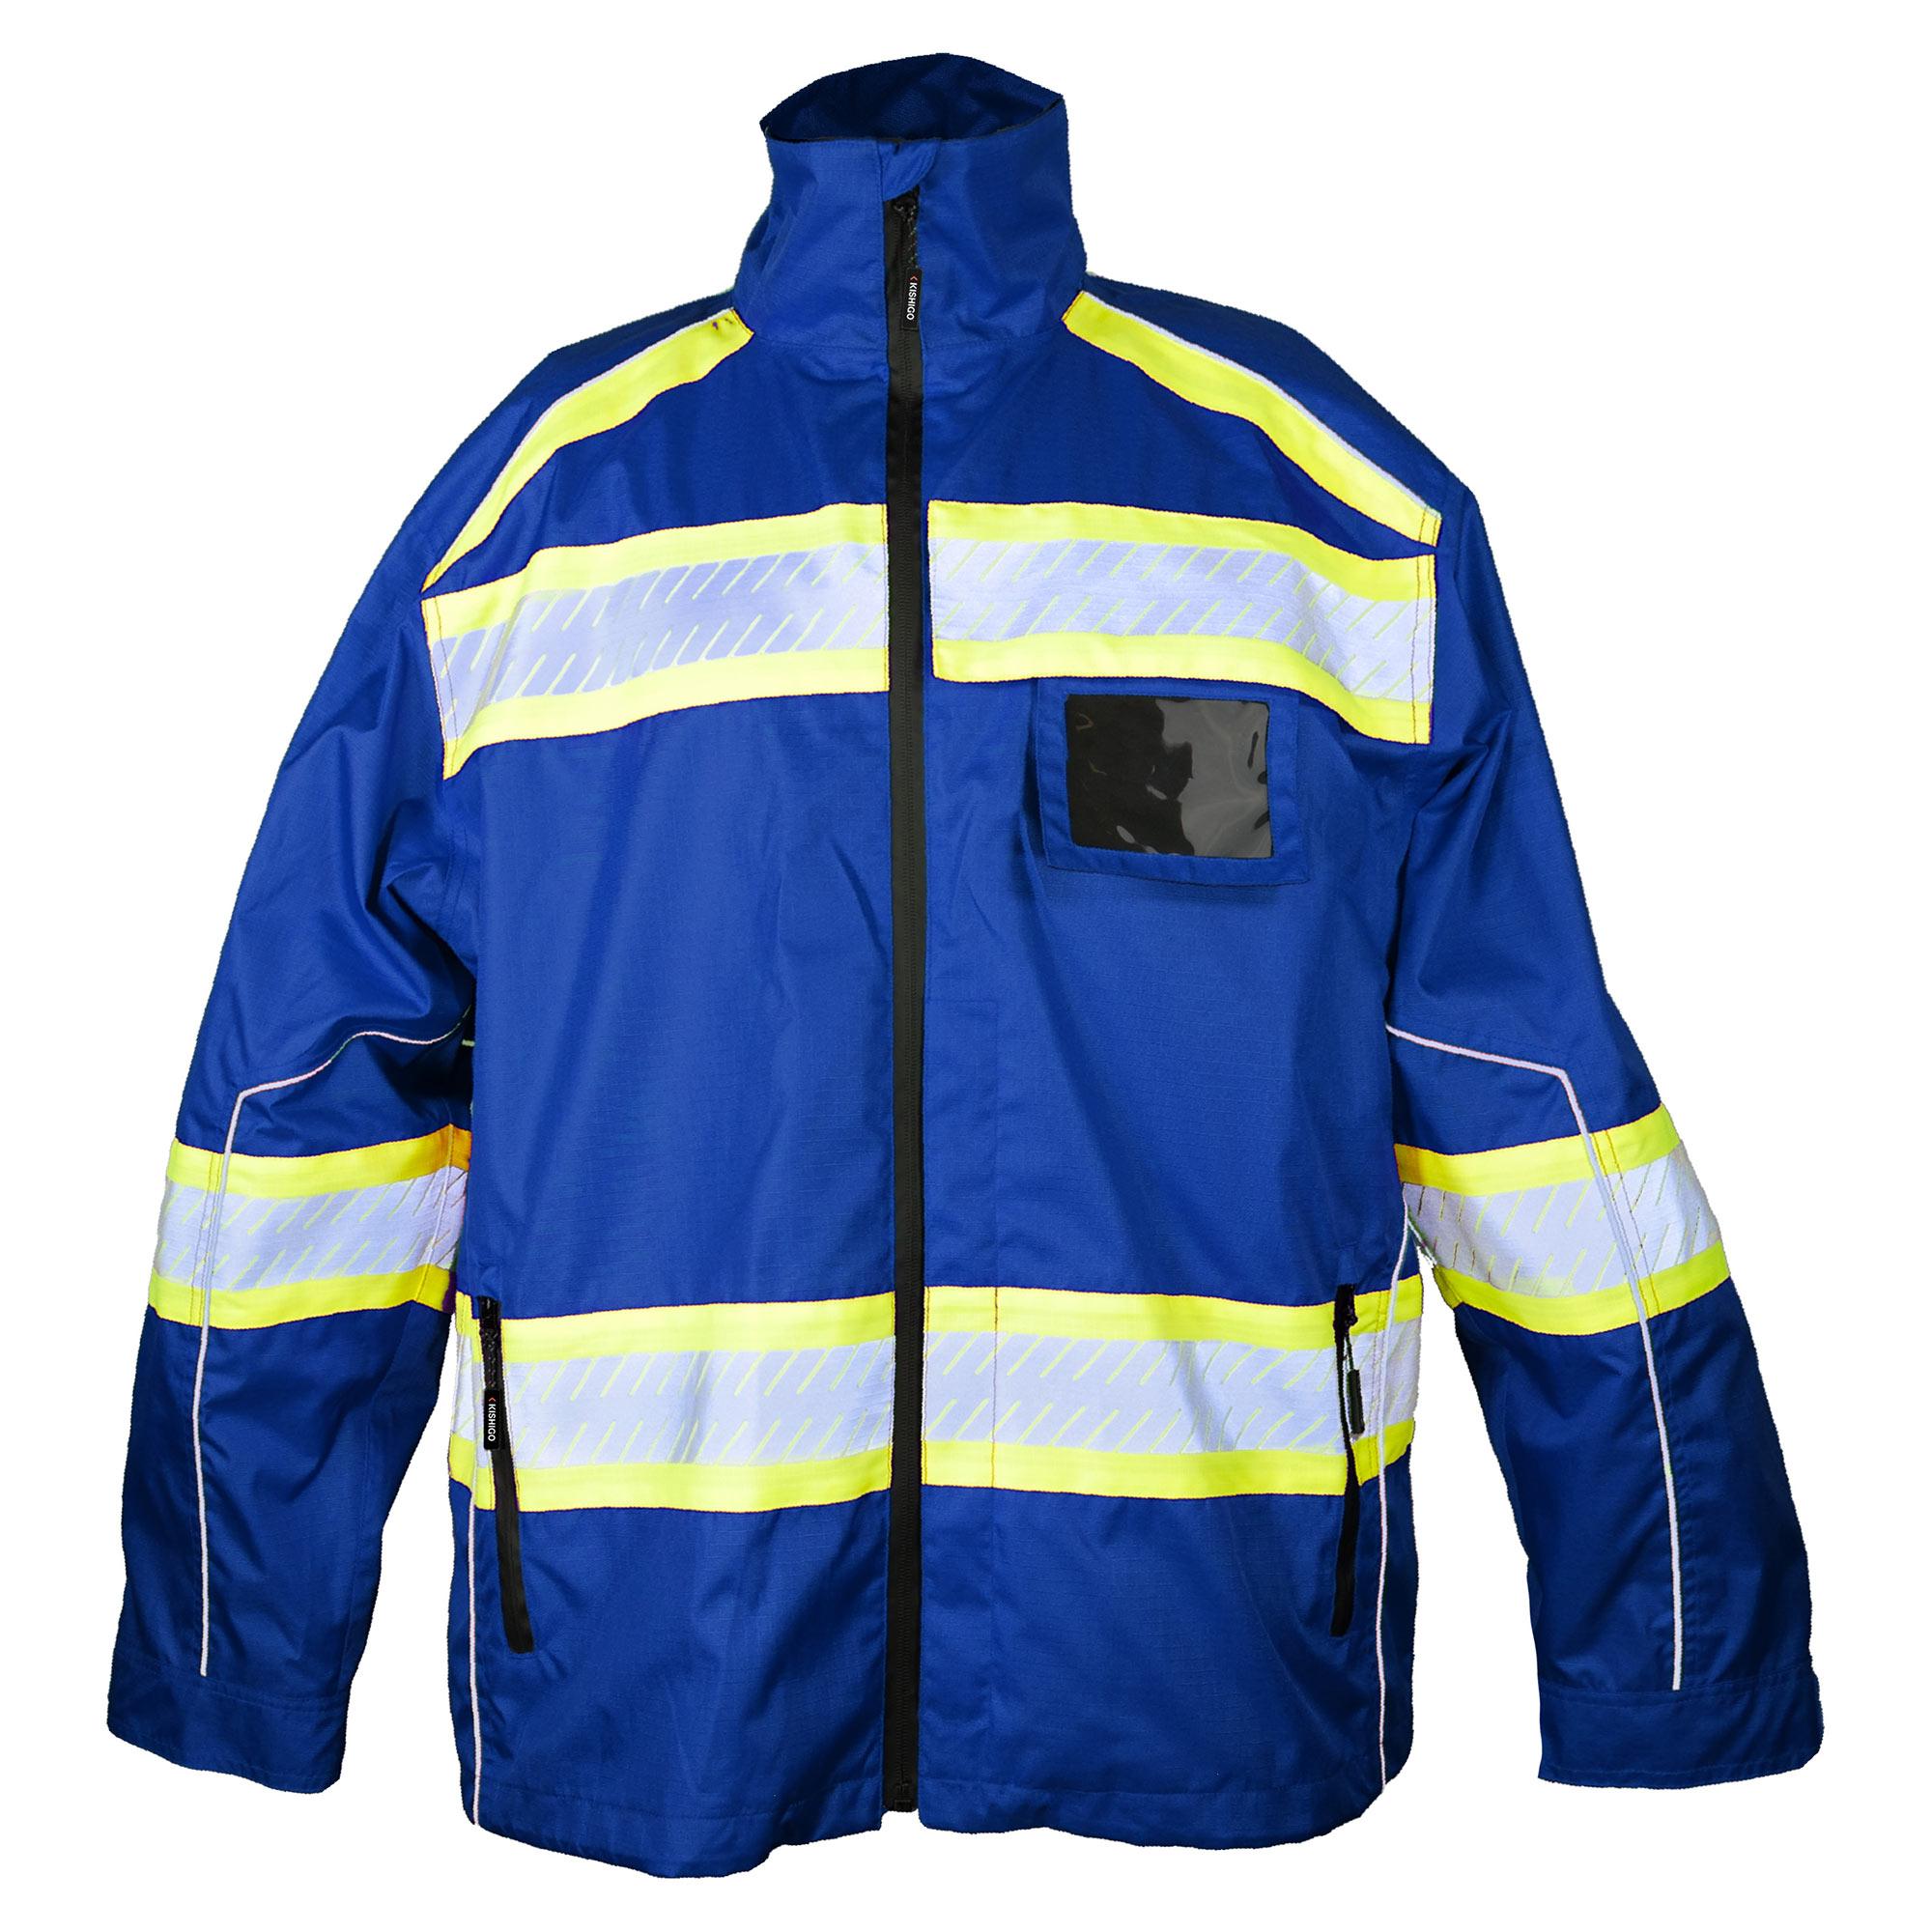 Kishigo B302 Enhanced Visibility Premium Jacket - Royal Blue | Full Source